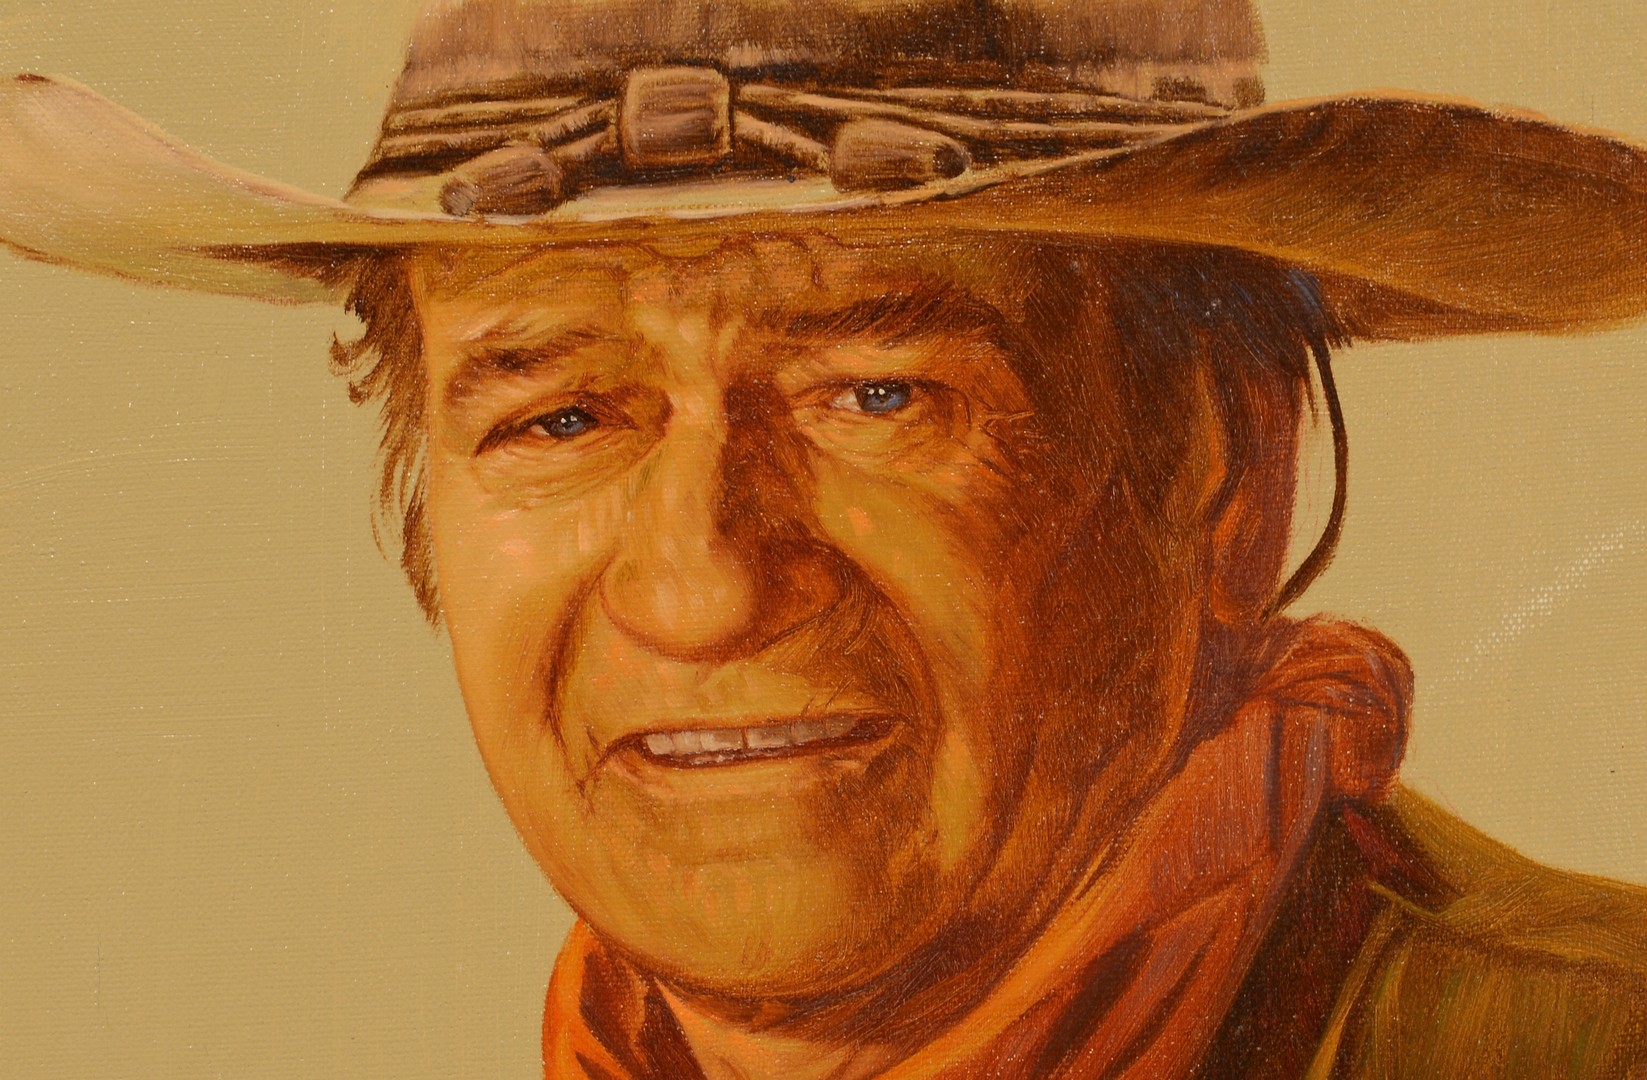 Lot 616: Lee Young, portrait of John Wayne